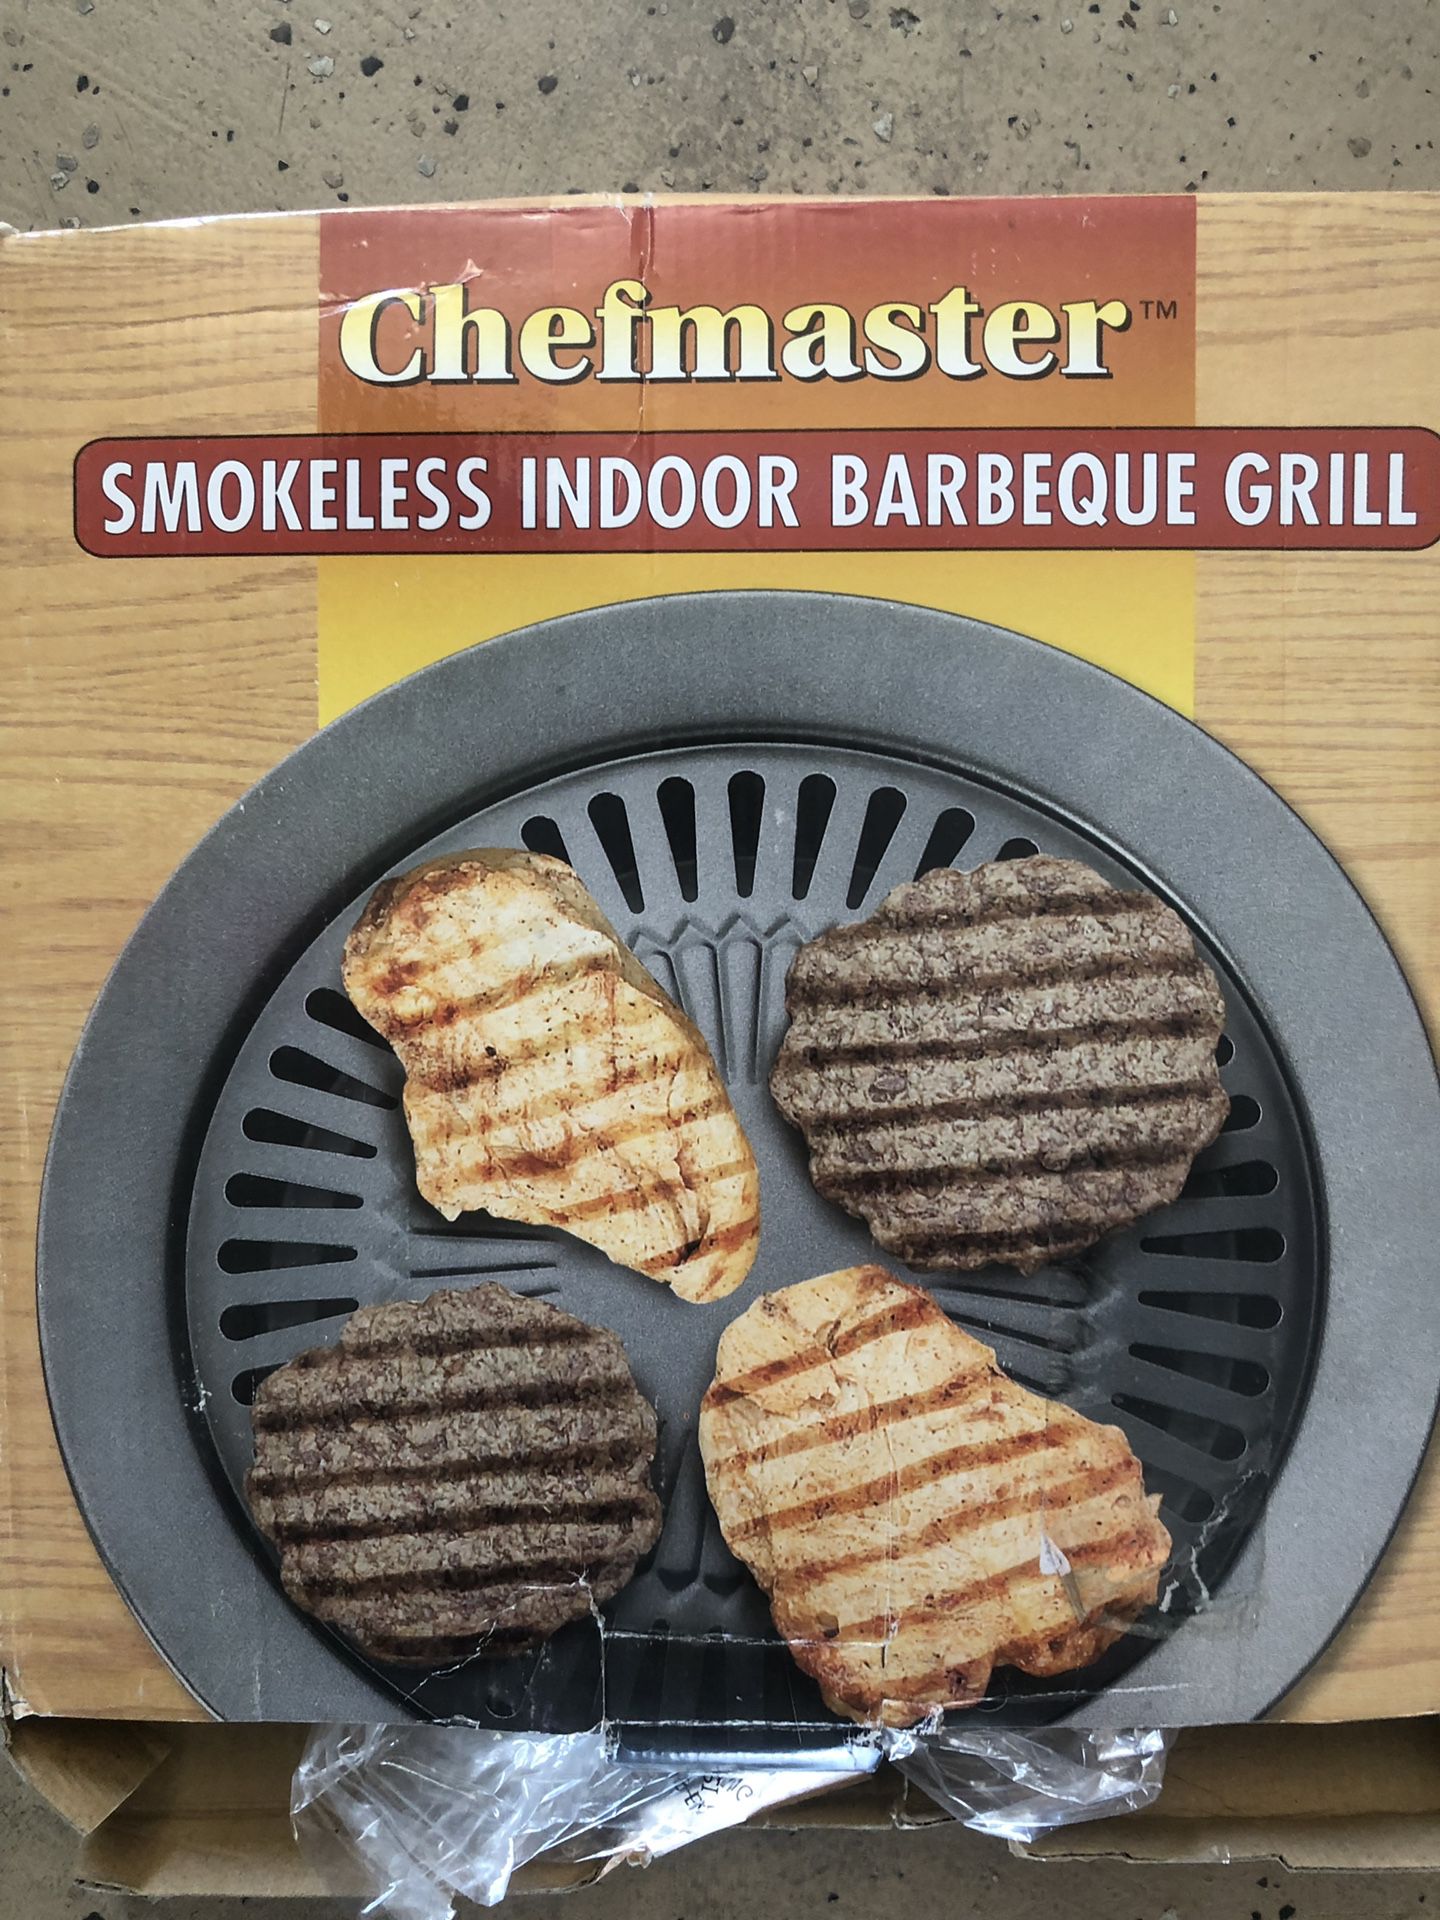 Smokeless indoor bbq grill